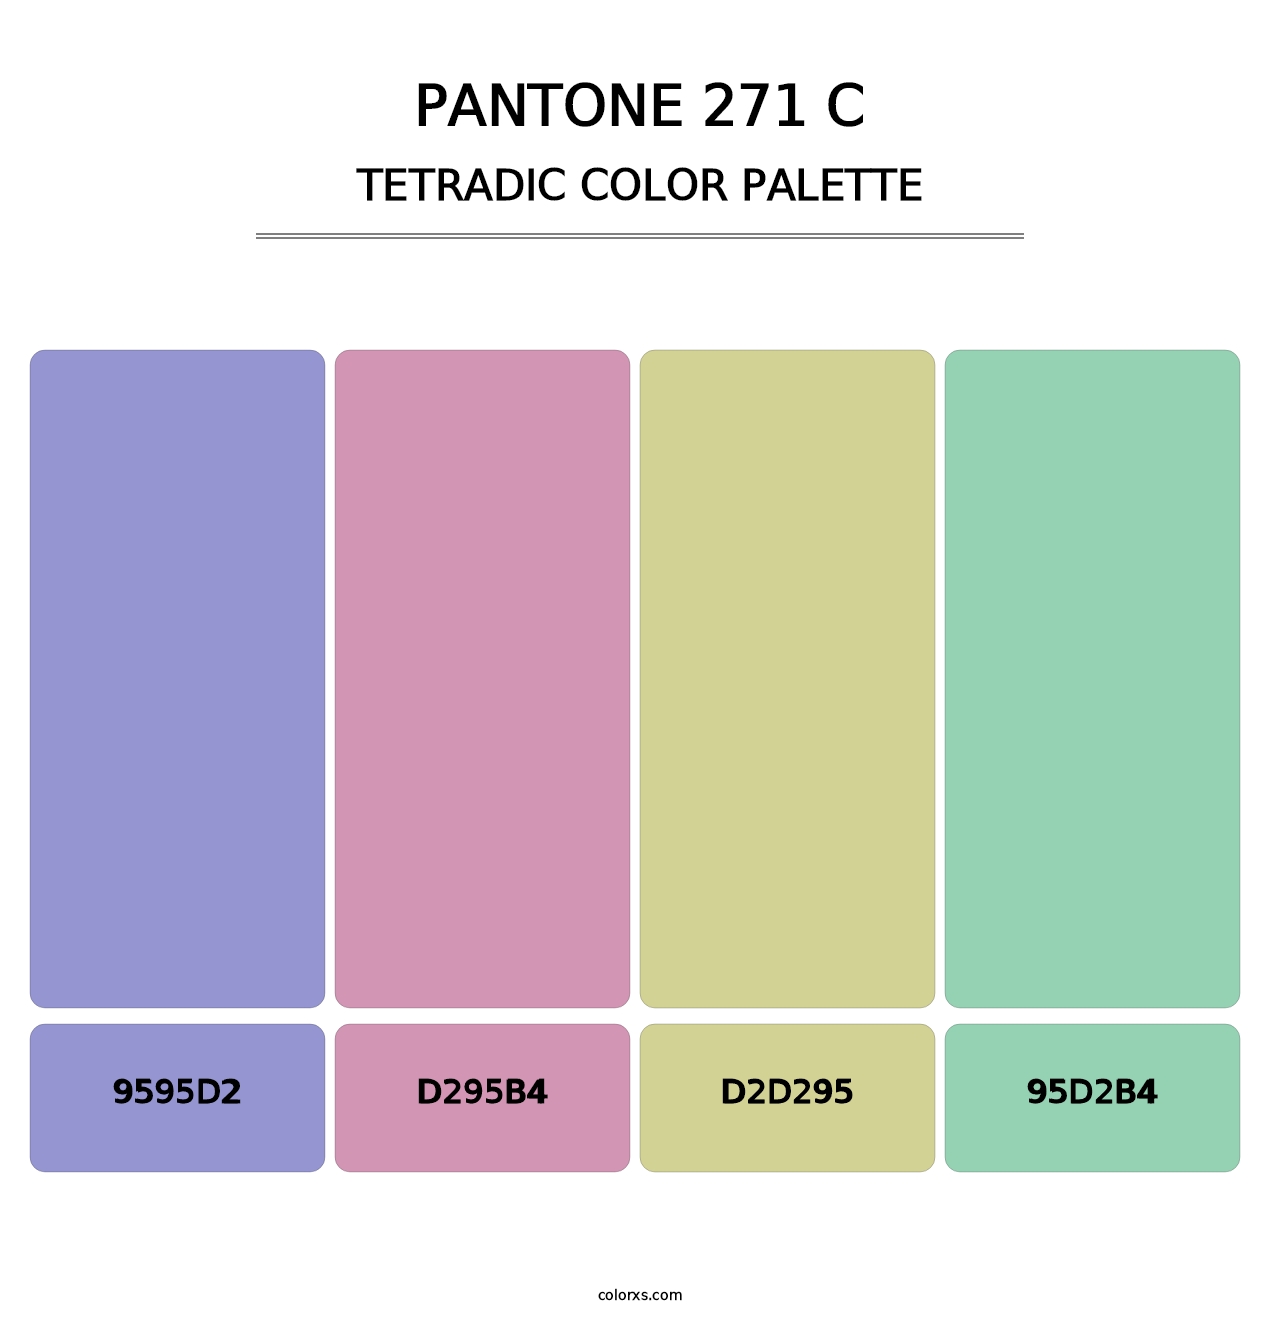 PANTONE 271 C - Tetradic Color Palette